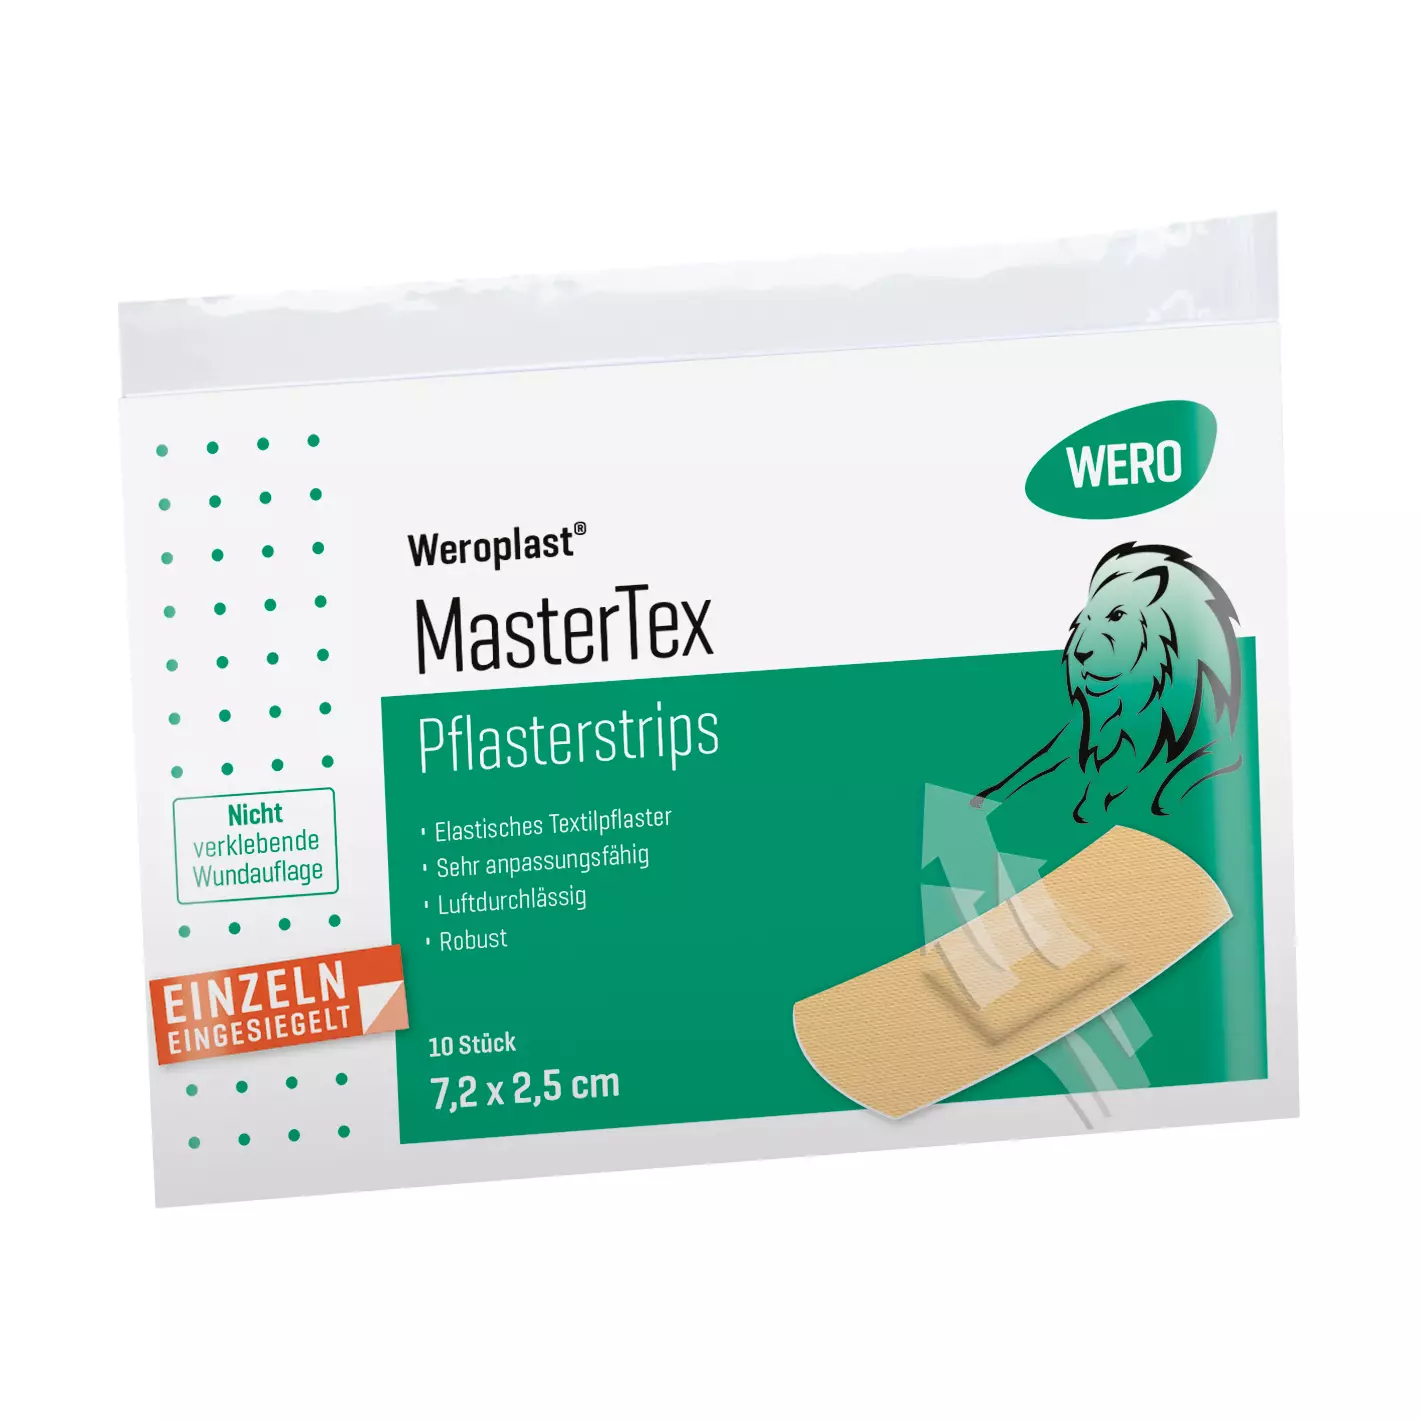 Pflasterstrips Weroplast® MasterTex - 2,5 cm, 10 Stk